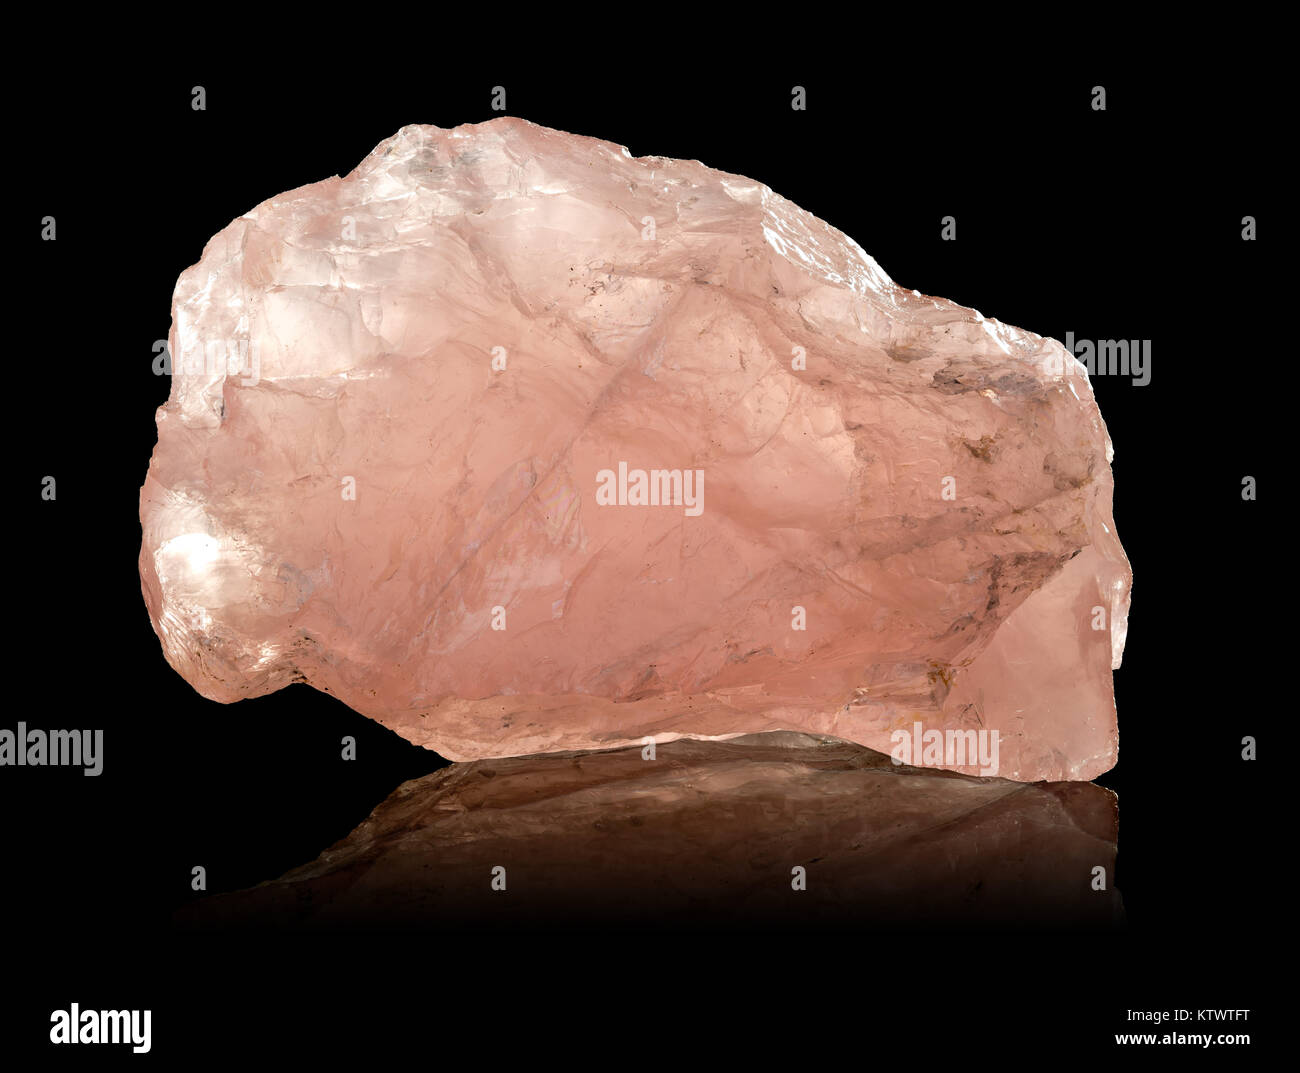 Raw, uncut rose quartz crystal over black background Stock Photo